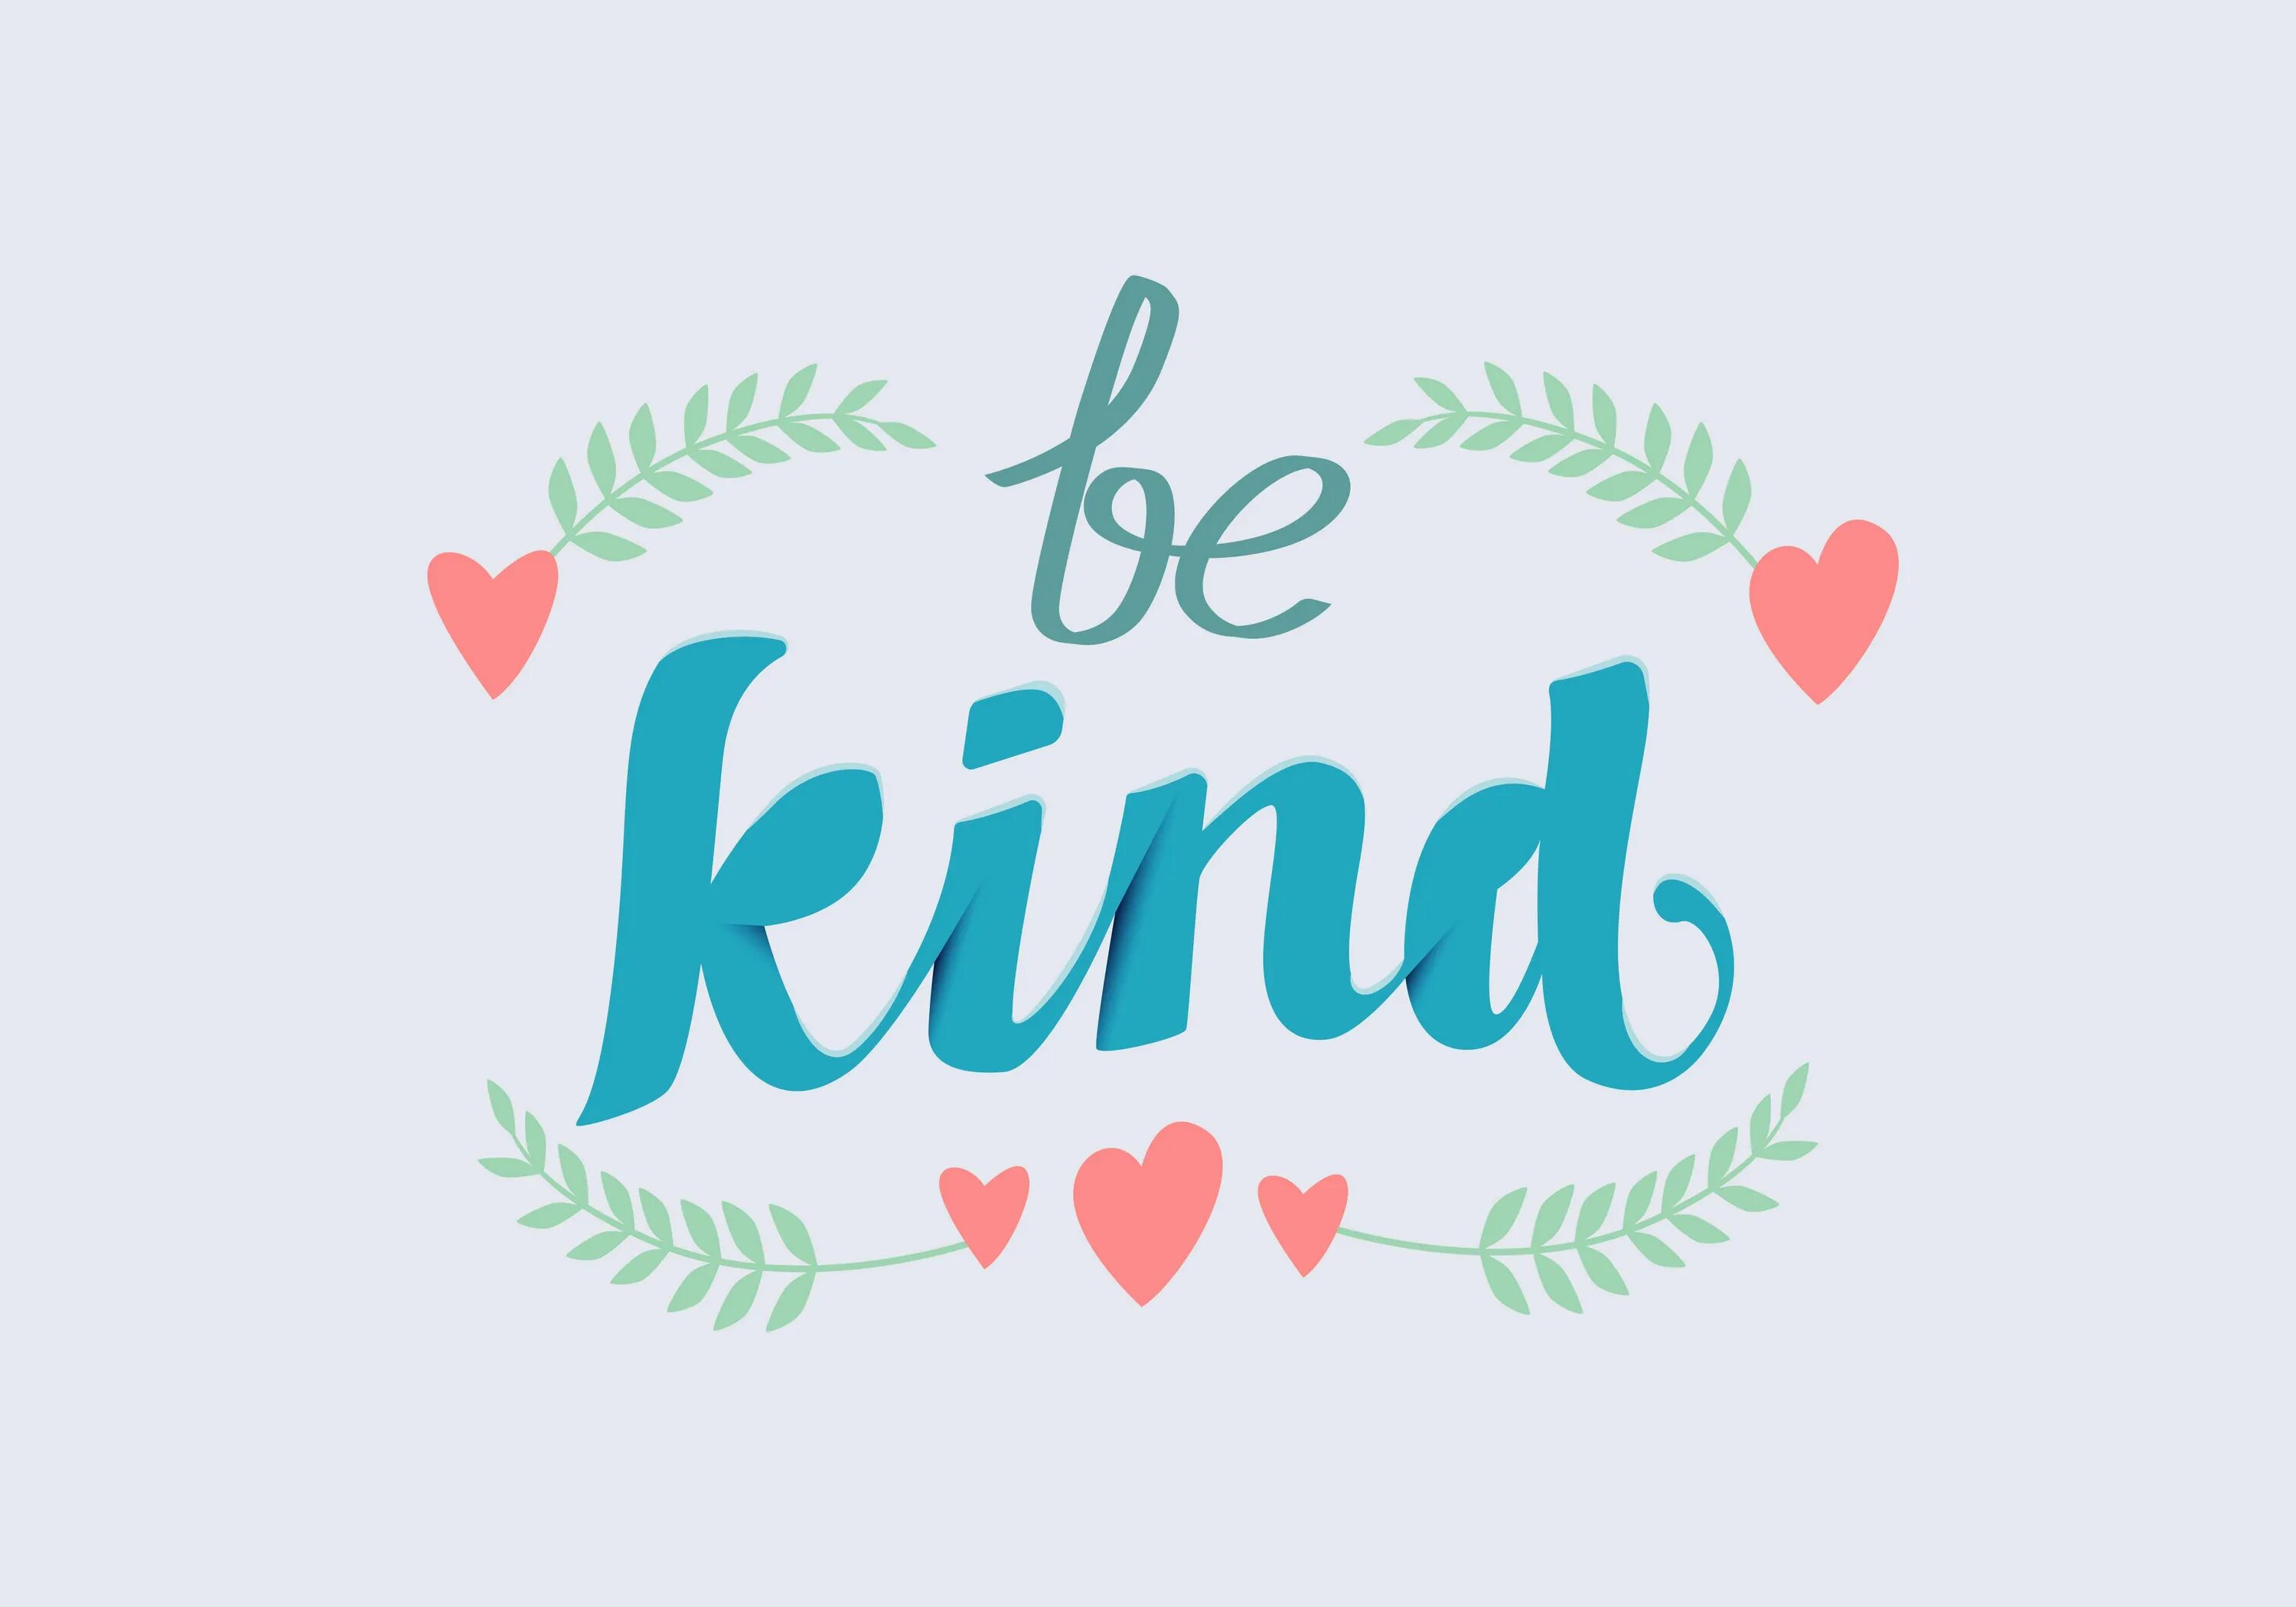 Be kind to the world. Bee kind. Be kind надпись. Be kind картинка. Добрый kind.